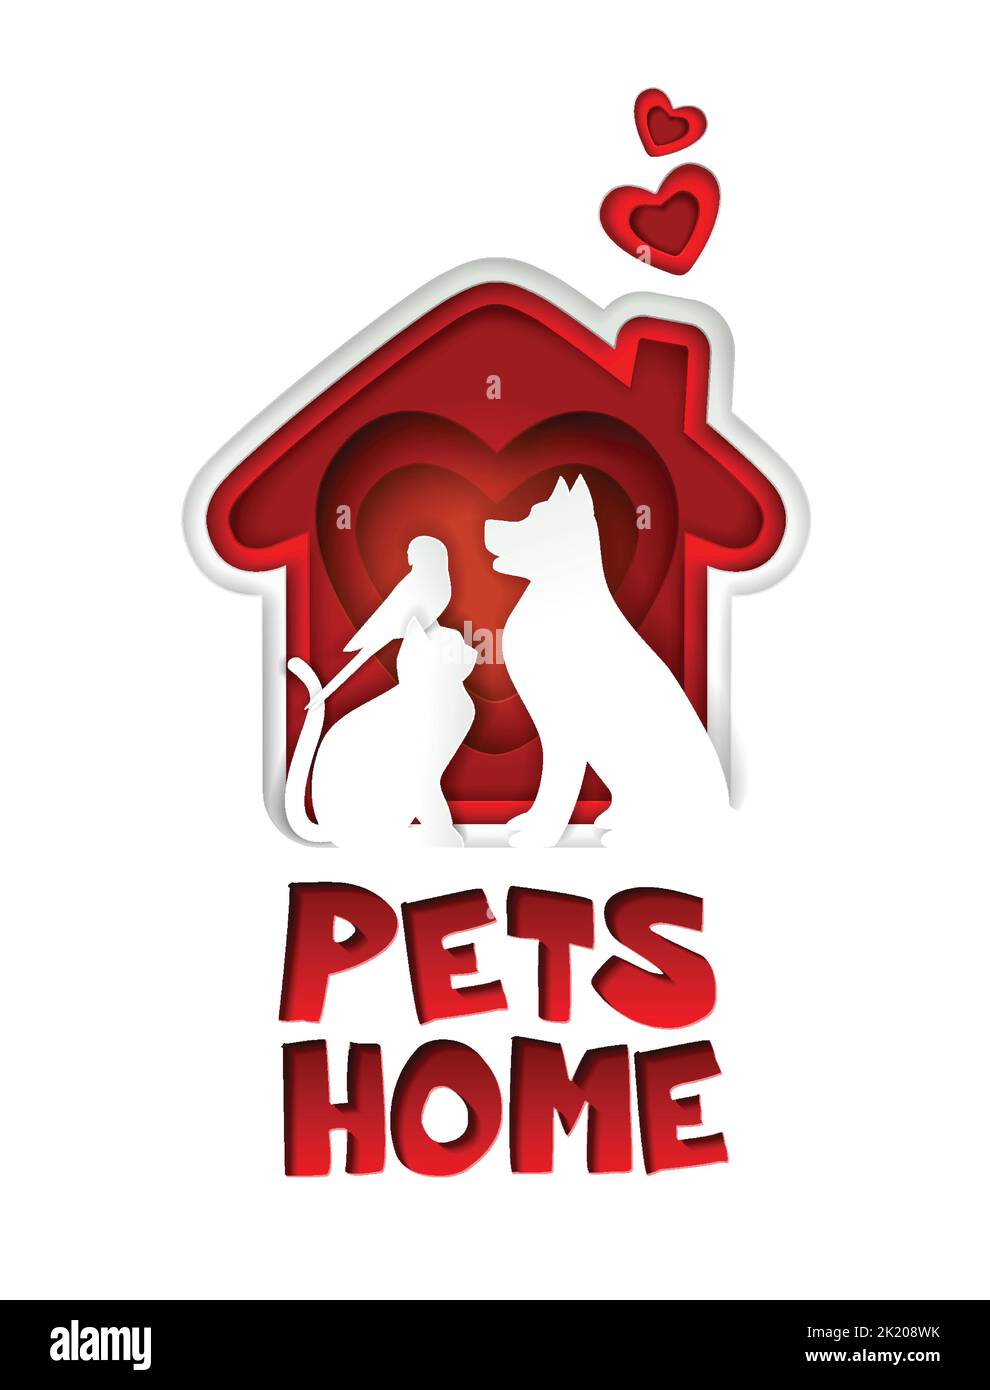 Pets home logo vector paper cut design template Stock Vector